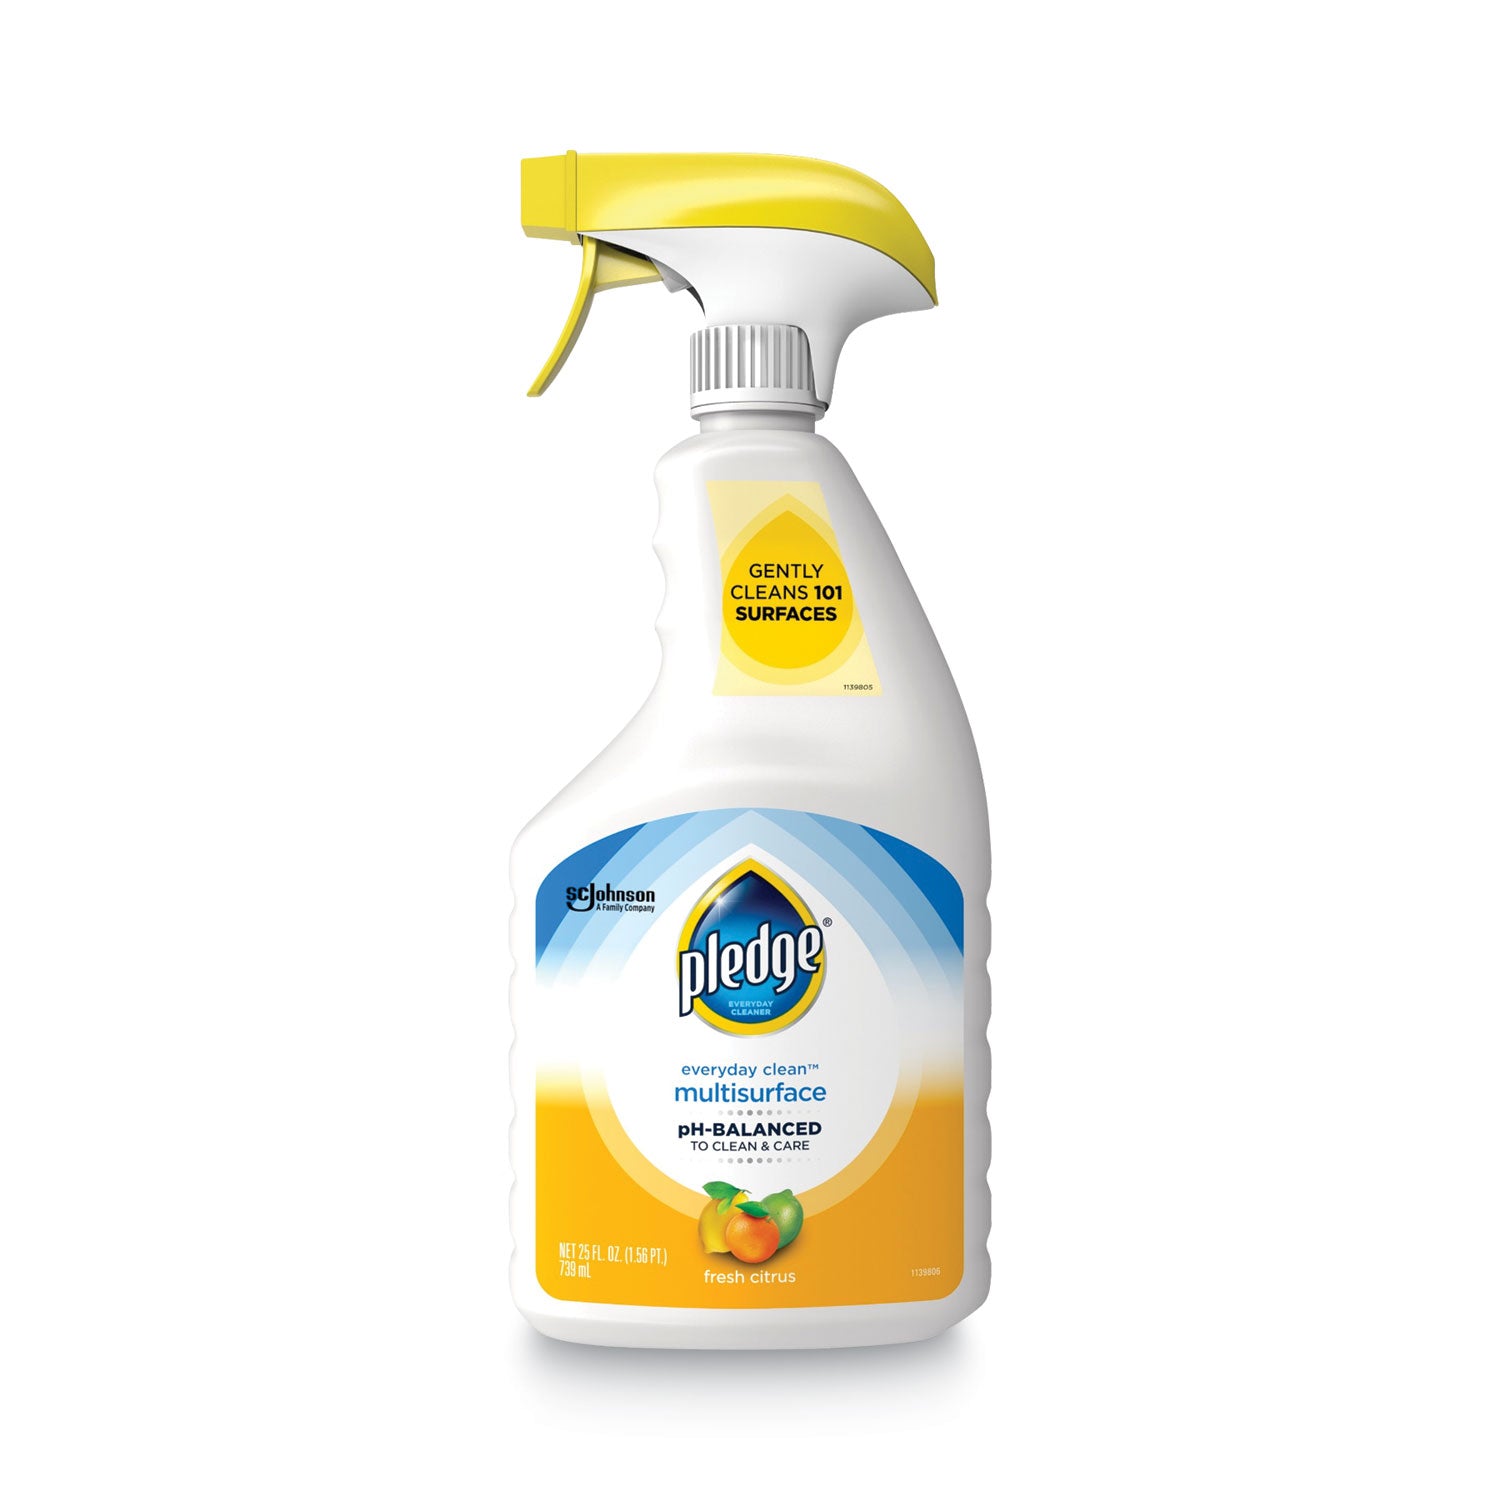 ph-balanced-everyday-clean-multisurface-cleaner-clean-citrus-scent-25-oz-trigger-spray-bottle-6-carton_sjn336283 - 1